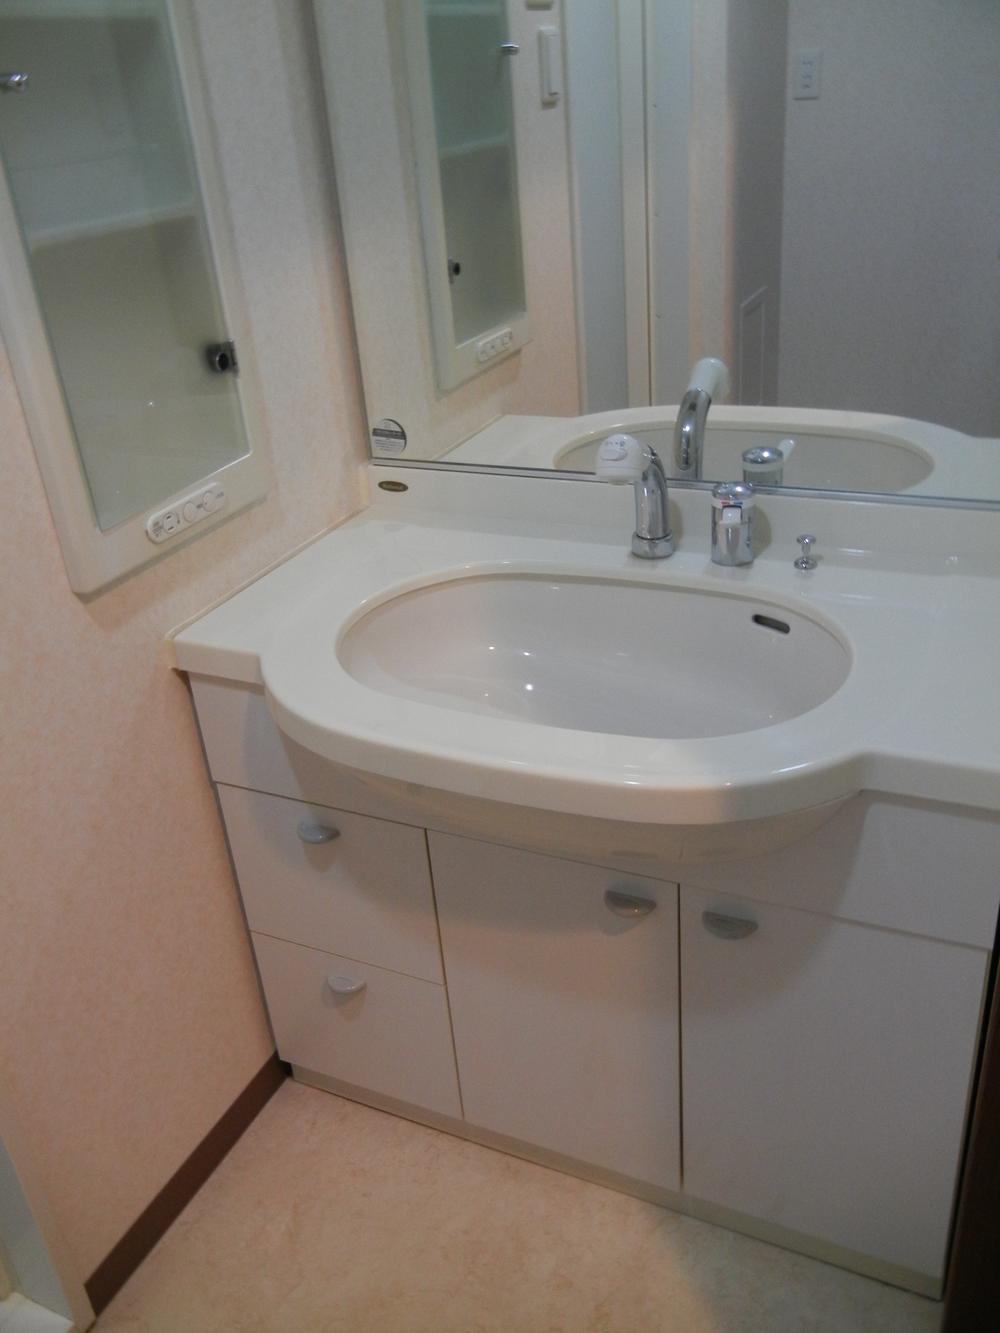 Wash basin, toilet. Spacious vanity.